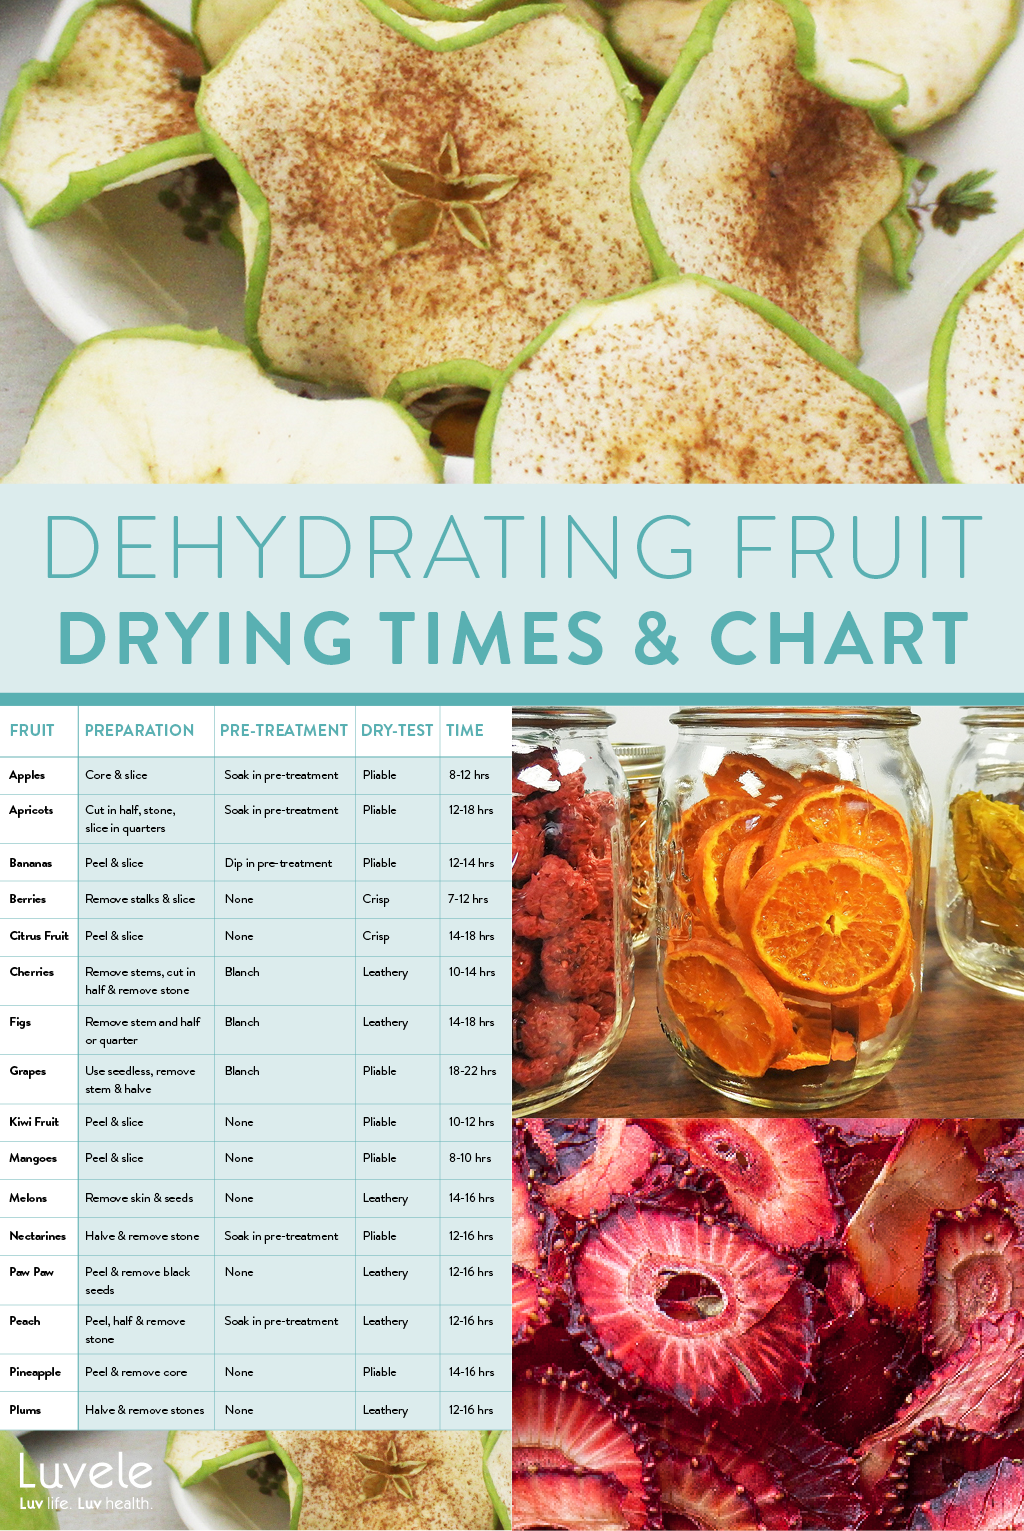 dehydrating fruit information chart